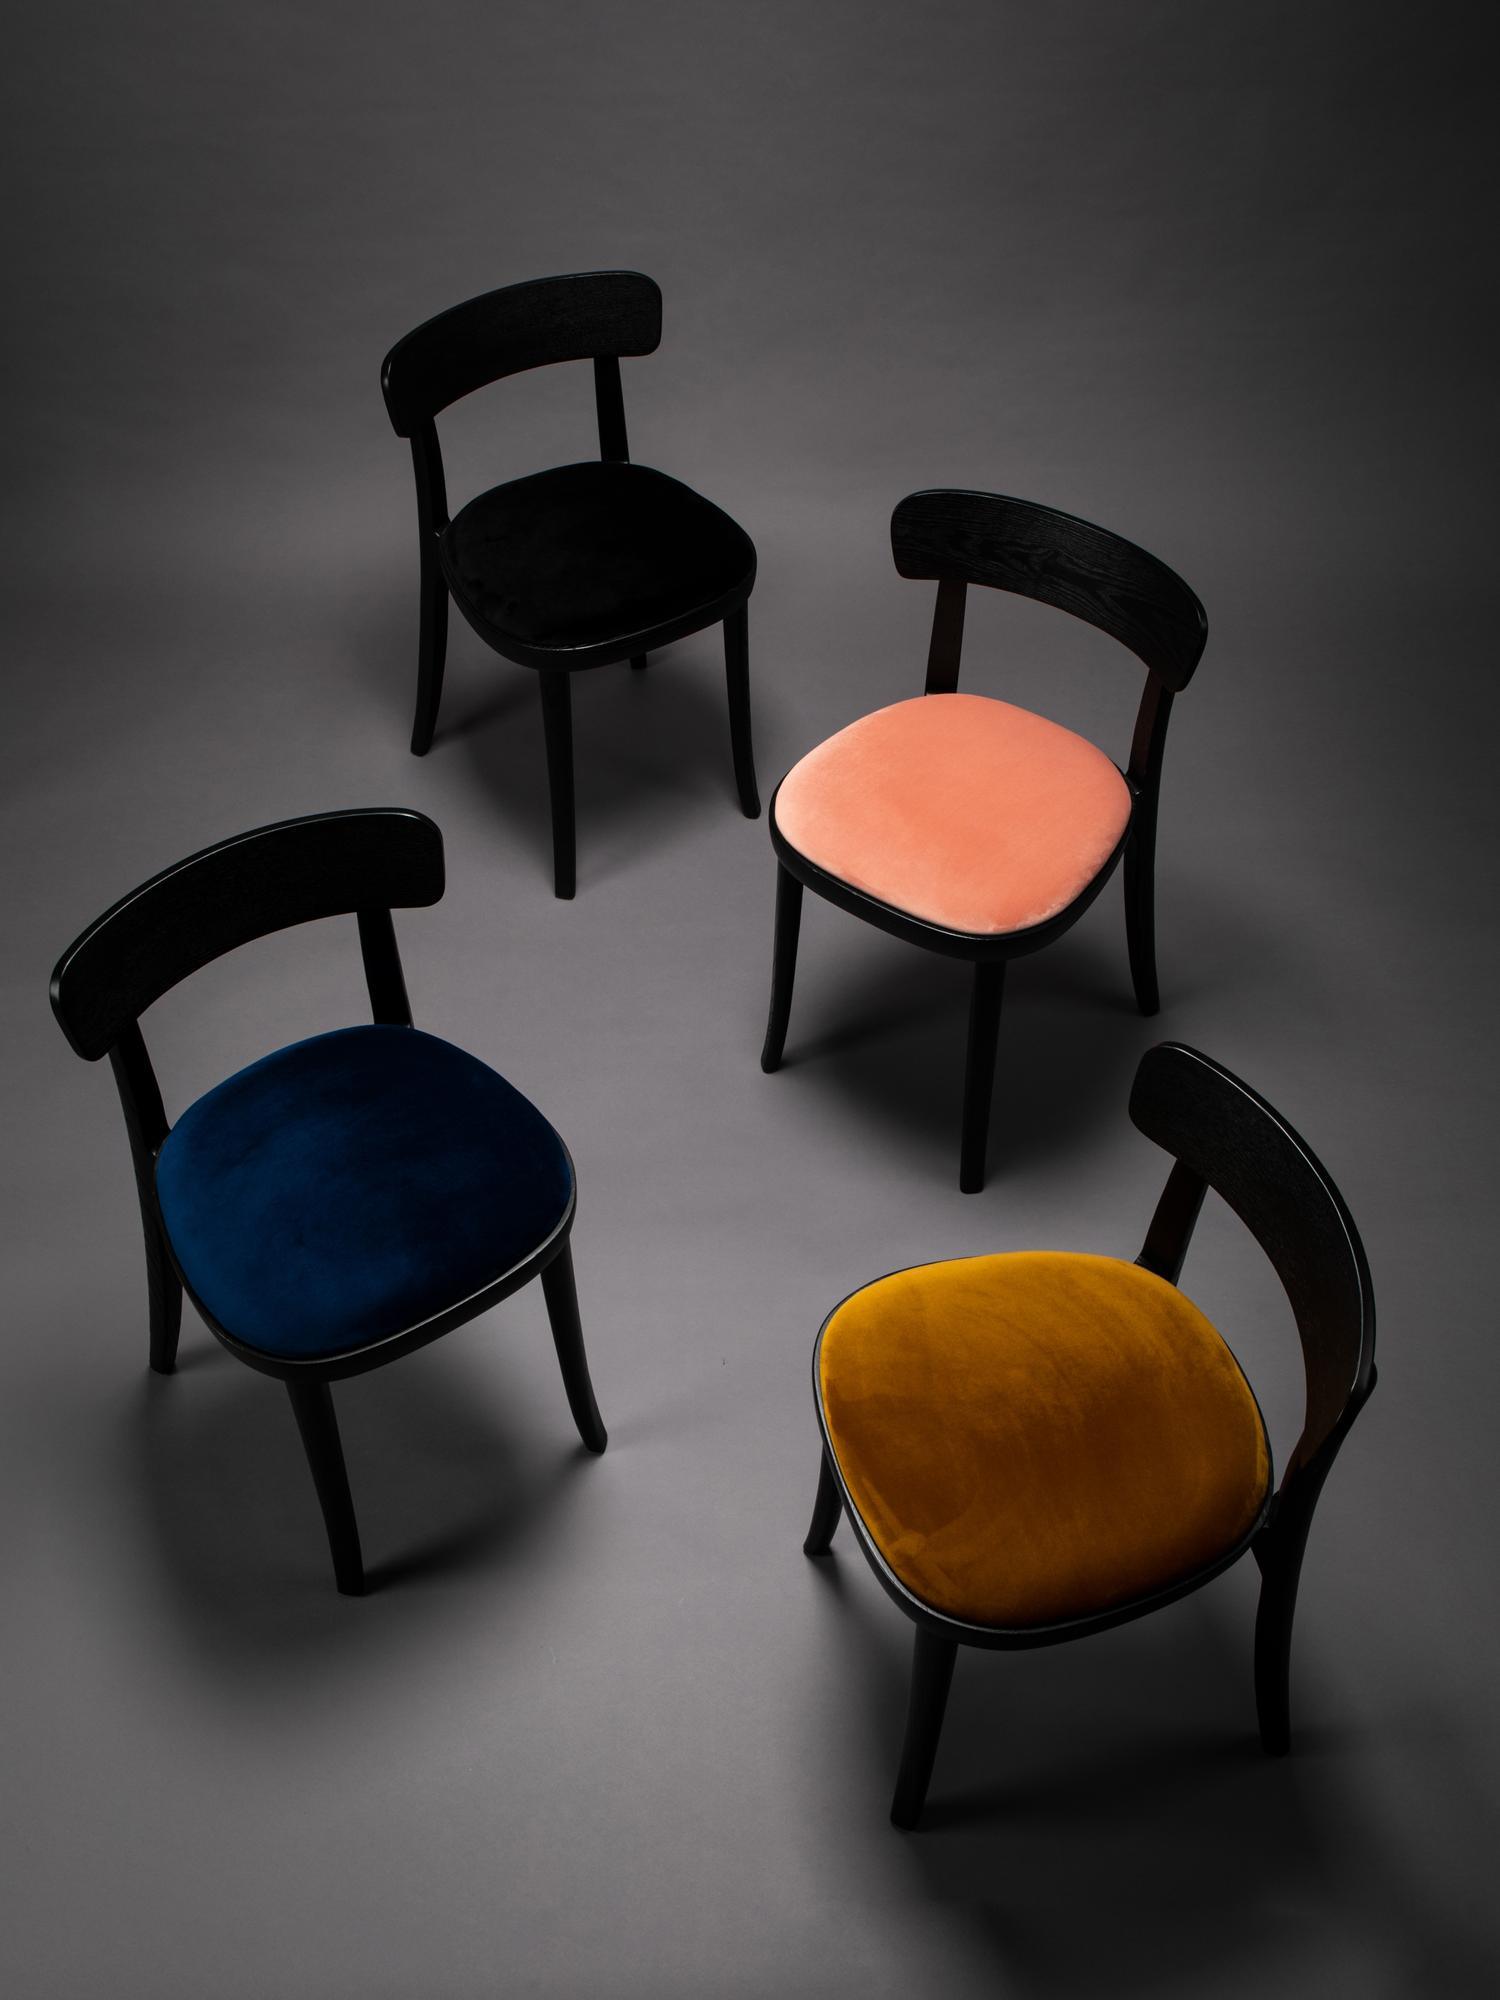 Krzesło BRANDON czarny, Dutchbone, Eye on Design